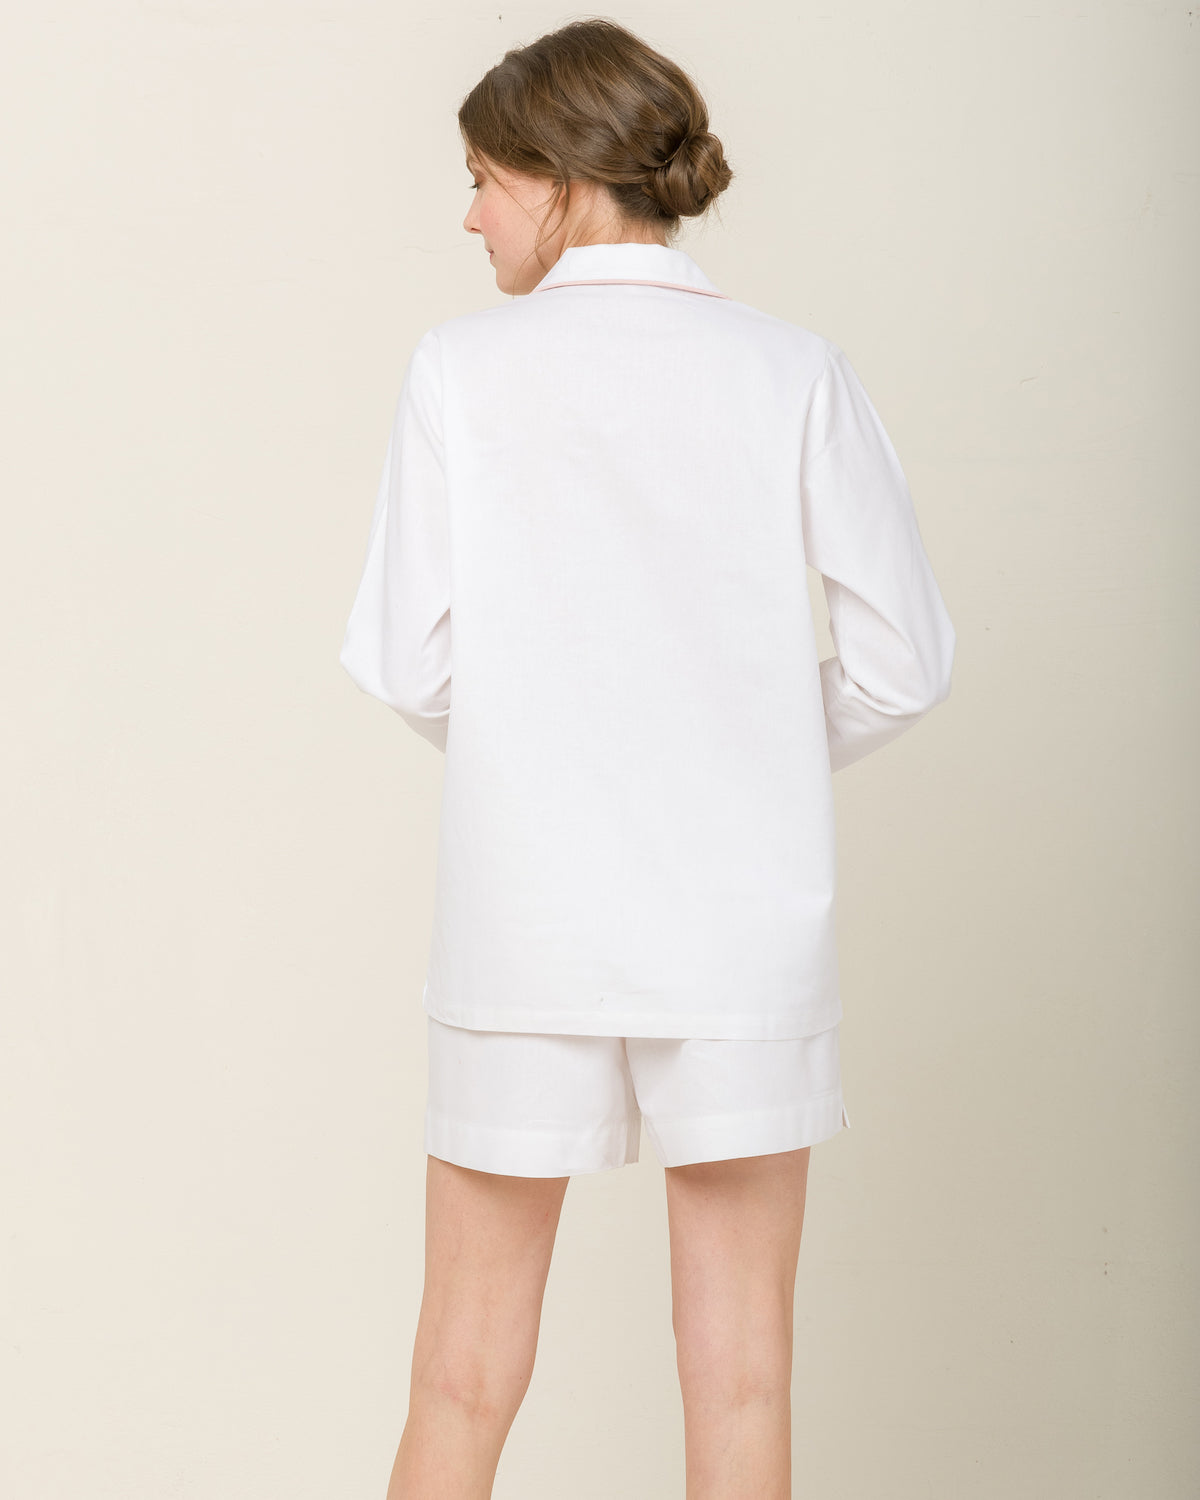 Sophia in Moonlight White - Short Loungewear, Pyjama, Seidenpyjama, Schlafanzug | RADICE